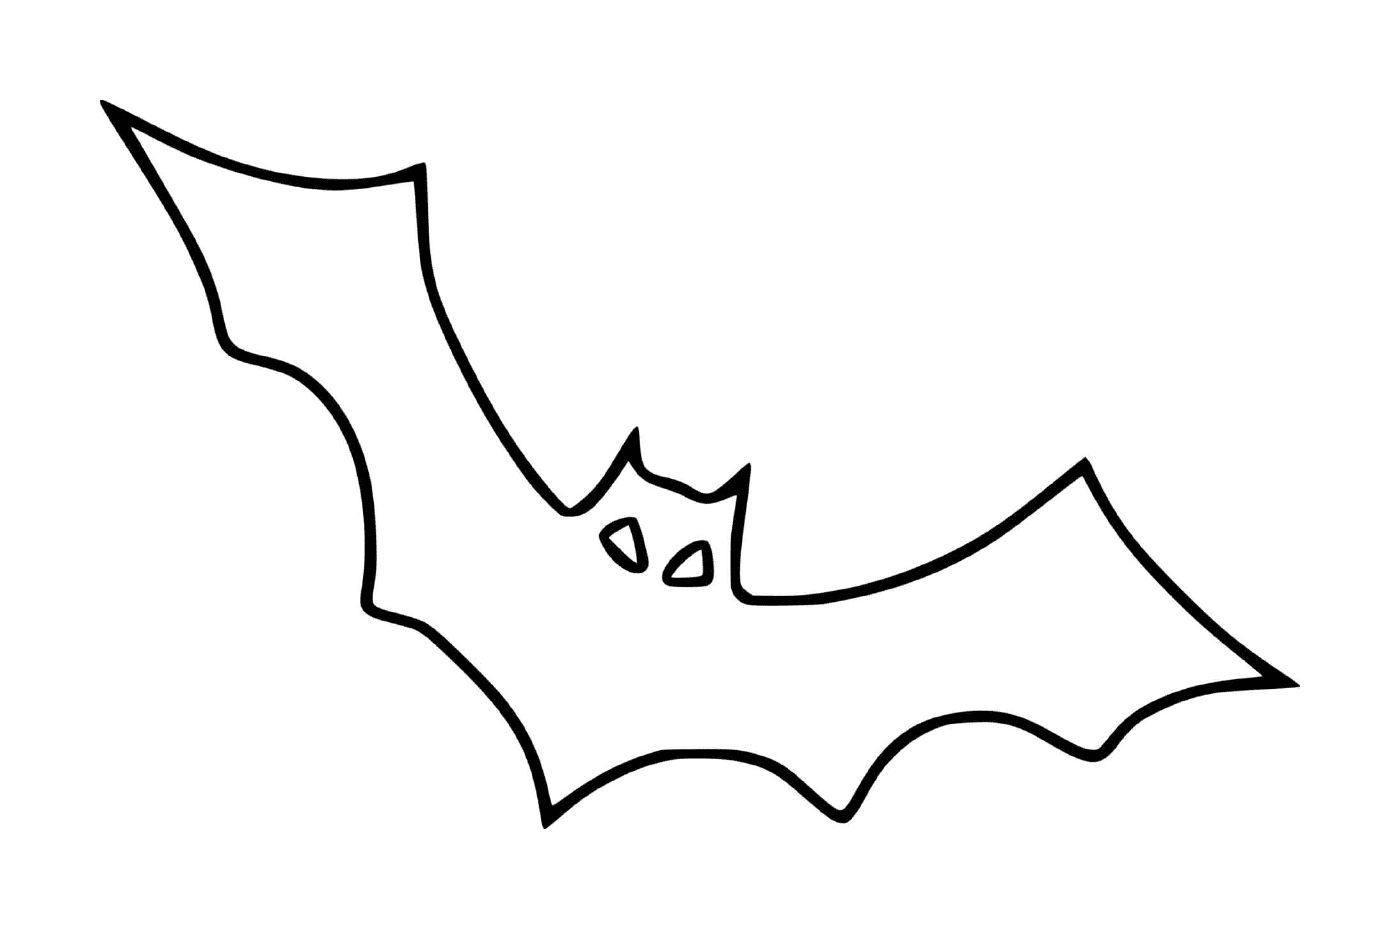  Batman Batman bat 